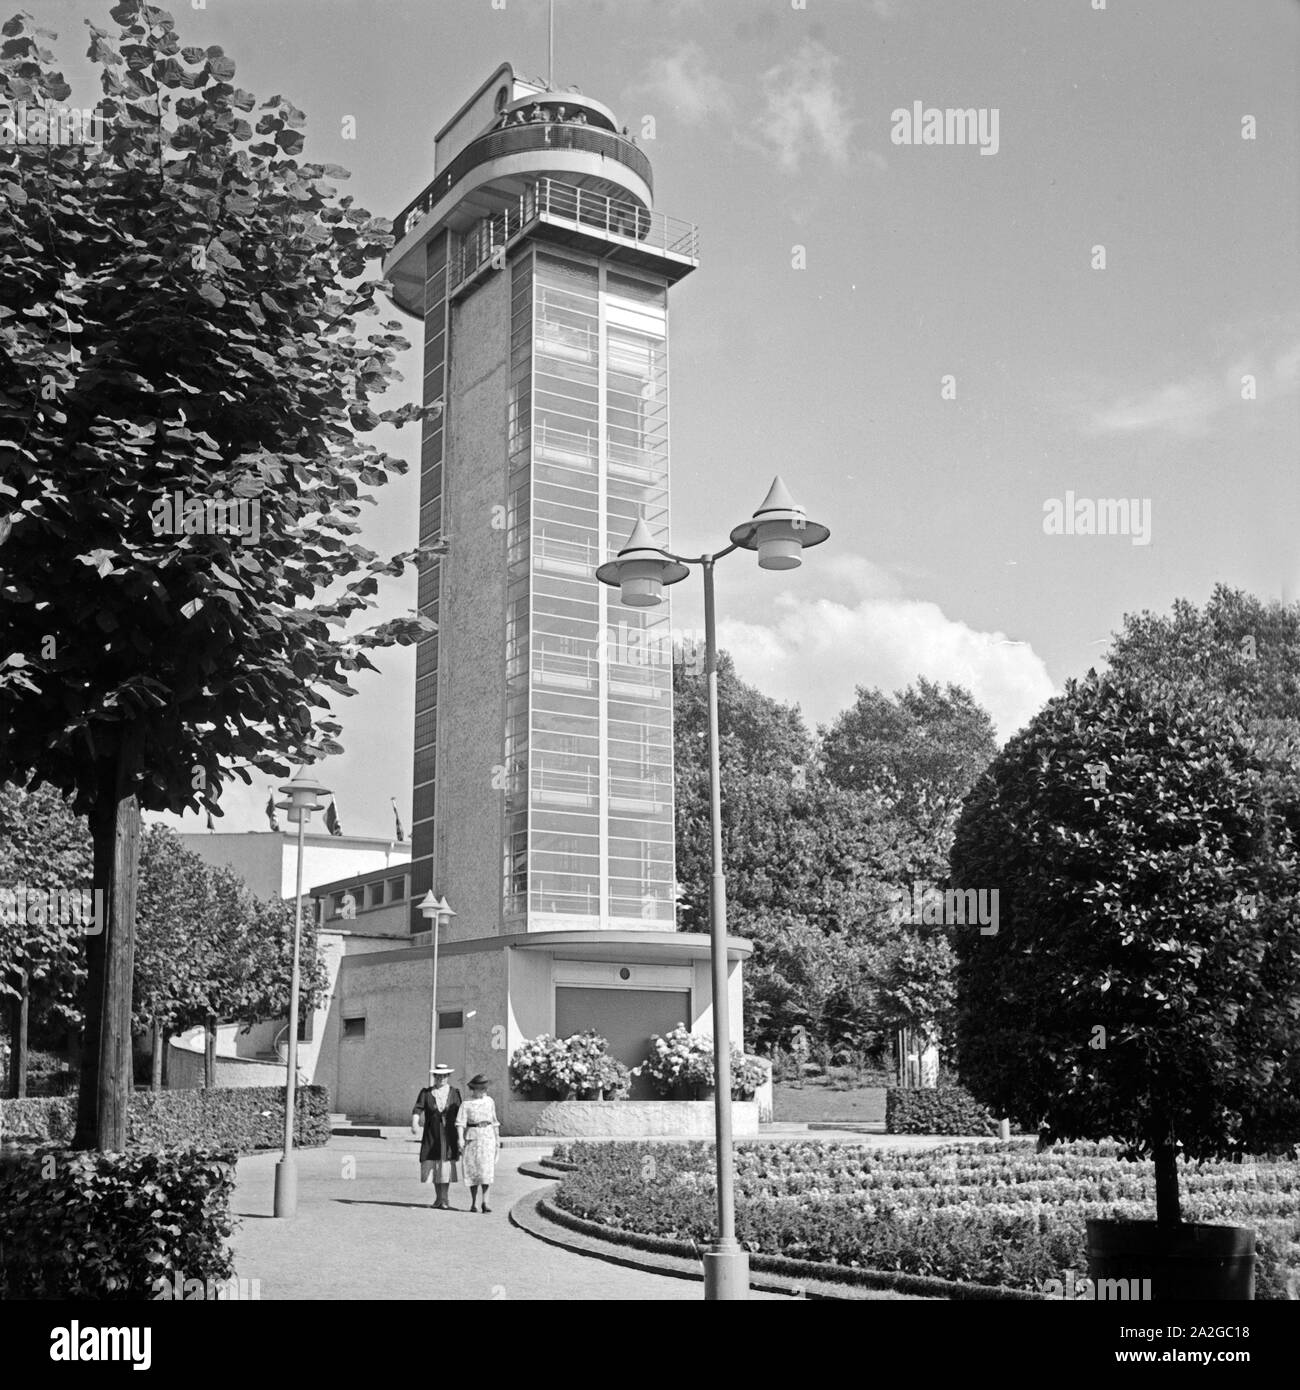 Der Grugaturm im al Grugapark in Essen, Deutschland 1930er Jahre. Grugaturm look-out al Grugapark giardini della città di Essen, Germania, 1930s. Foto Stock